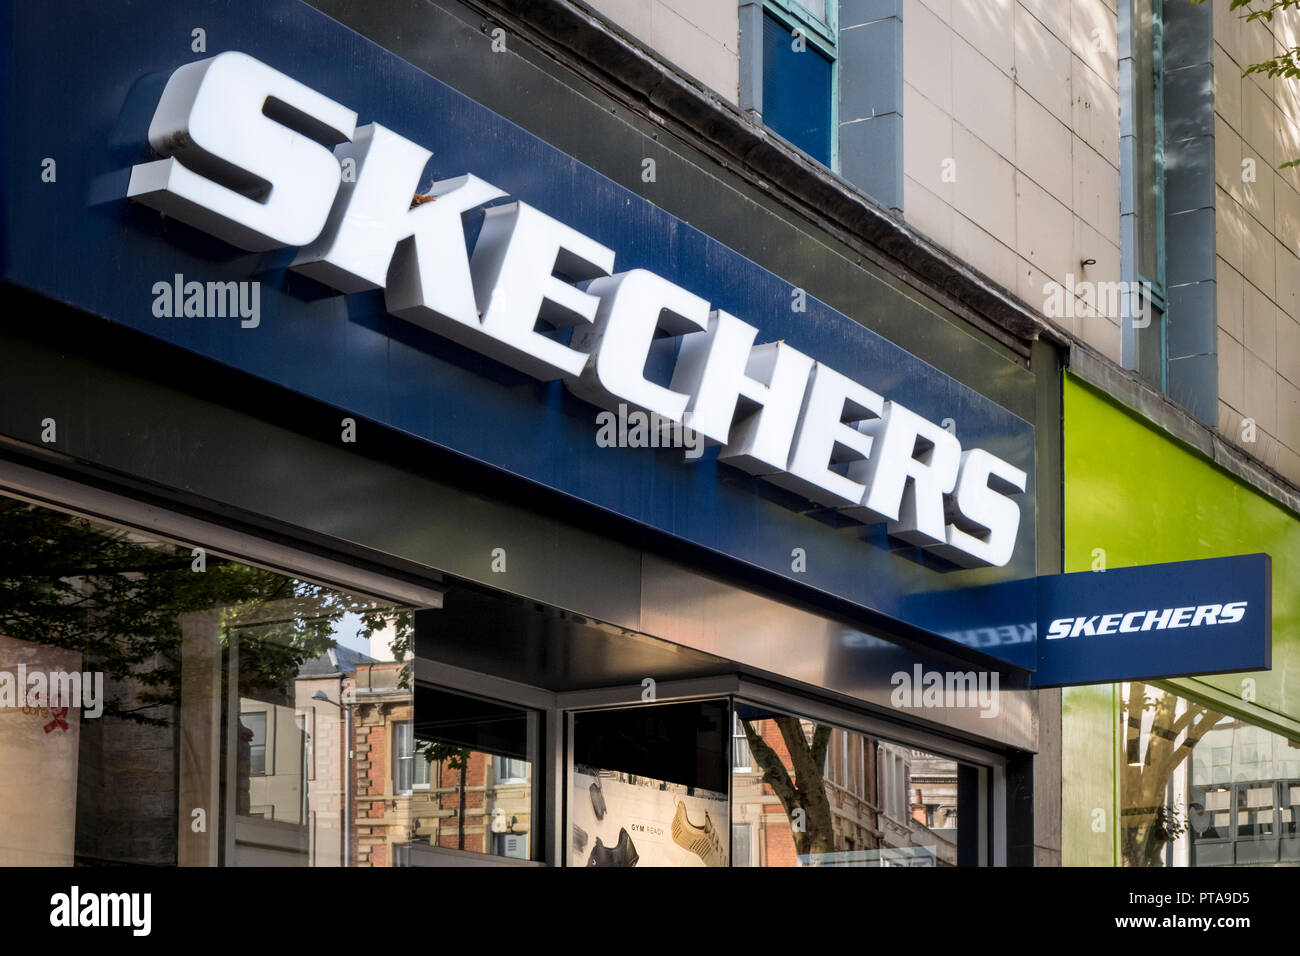 Skechers shop, Nottingham, England, UK 